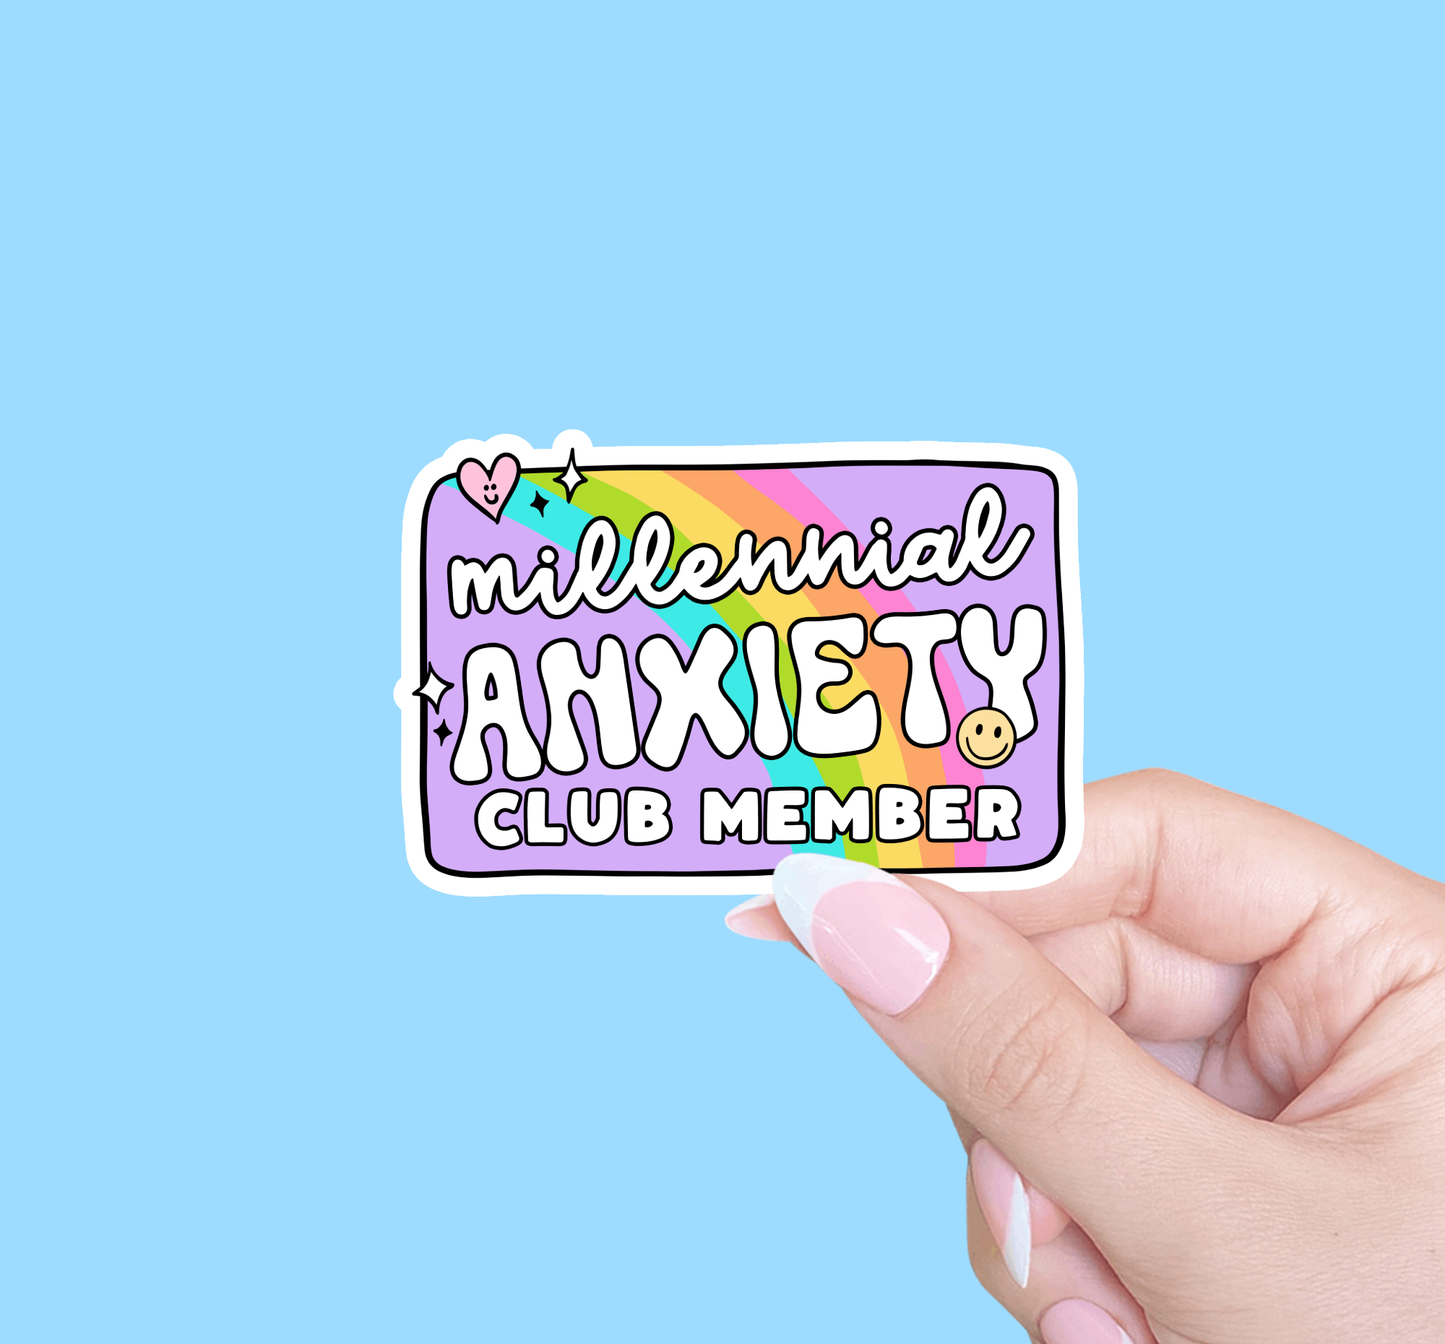 Millennial anxiety club member